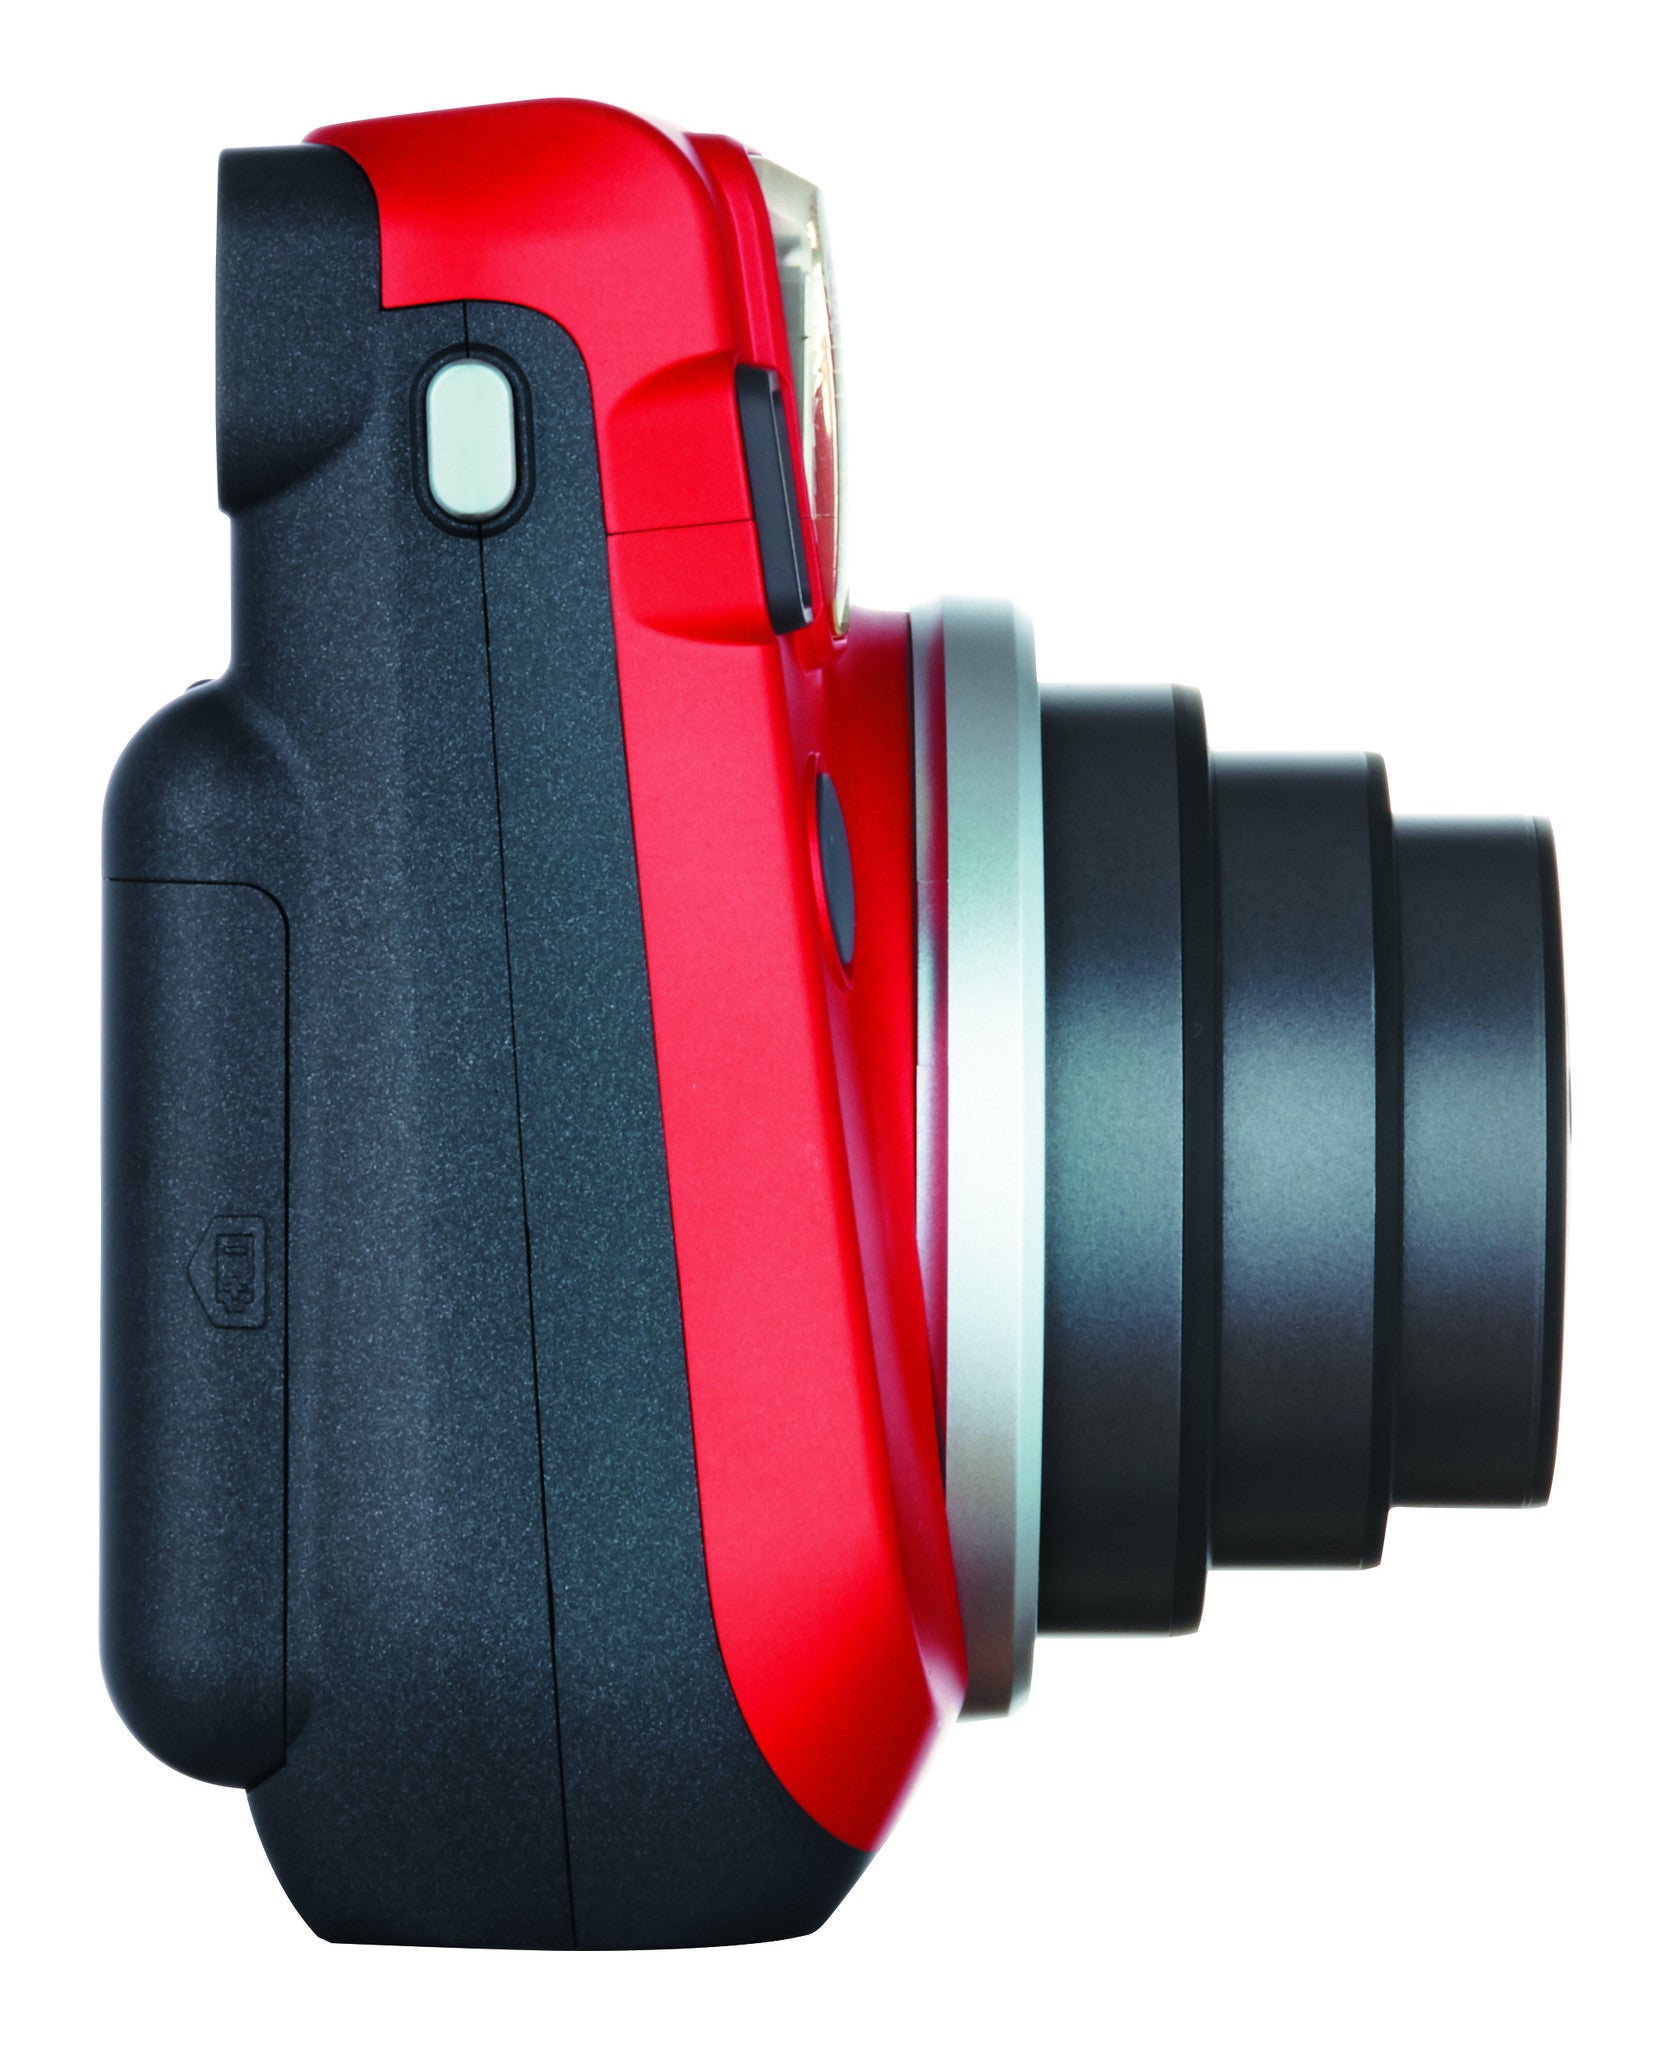 Fujifilm INSTAX Mini 70 Instant Film Camera (Passion Red), camera film cameras, Fujifilm - Pictureline  - 4